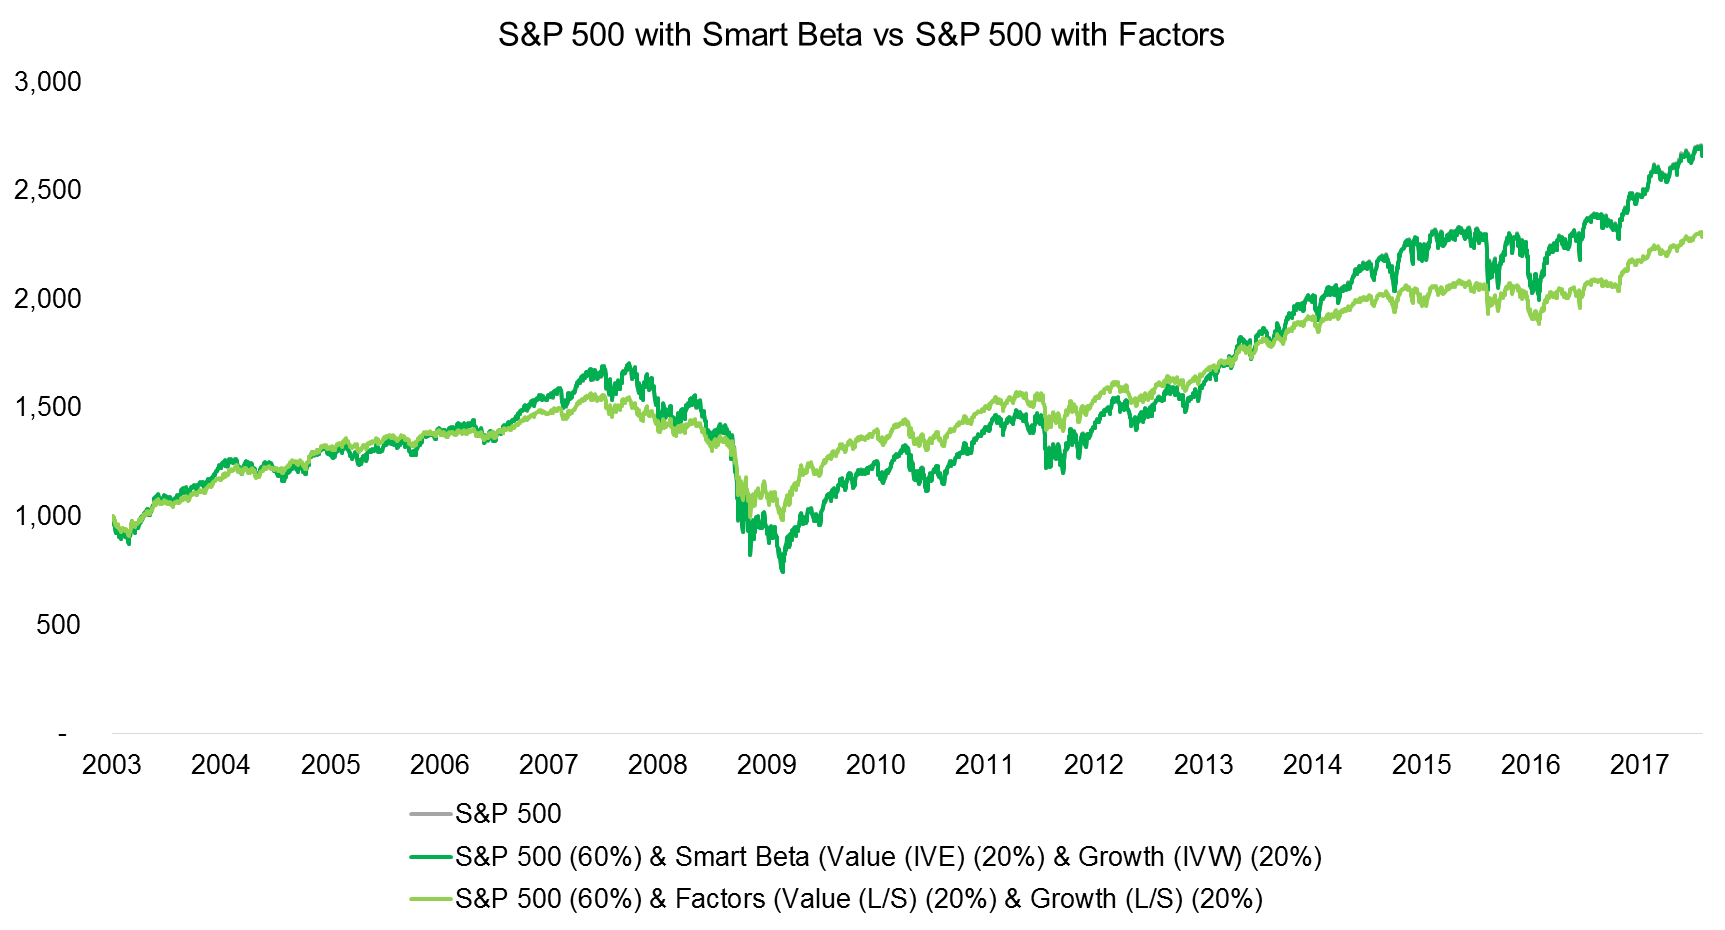 S&P 500 with Smart Beta vs S&P 500 with Factors